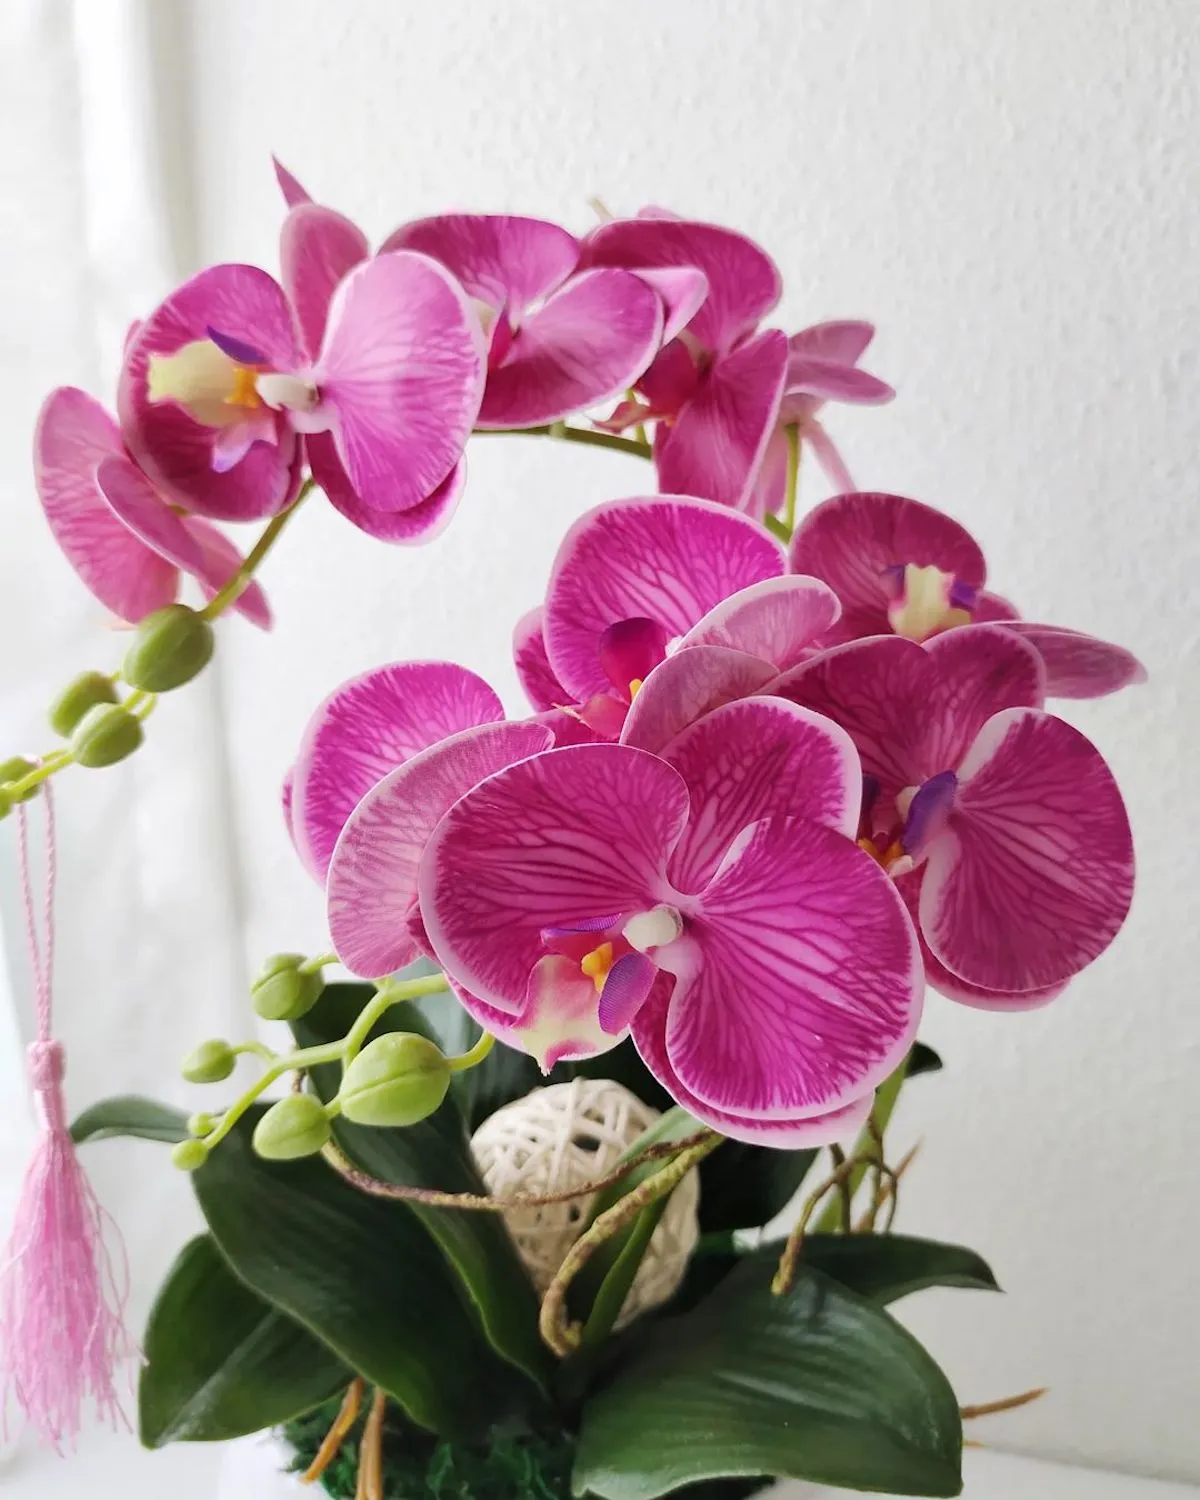 welche natuerlichen duenger fuer orchideen